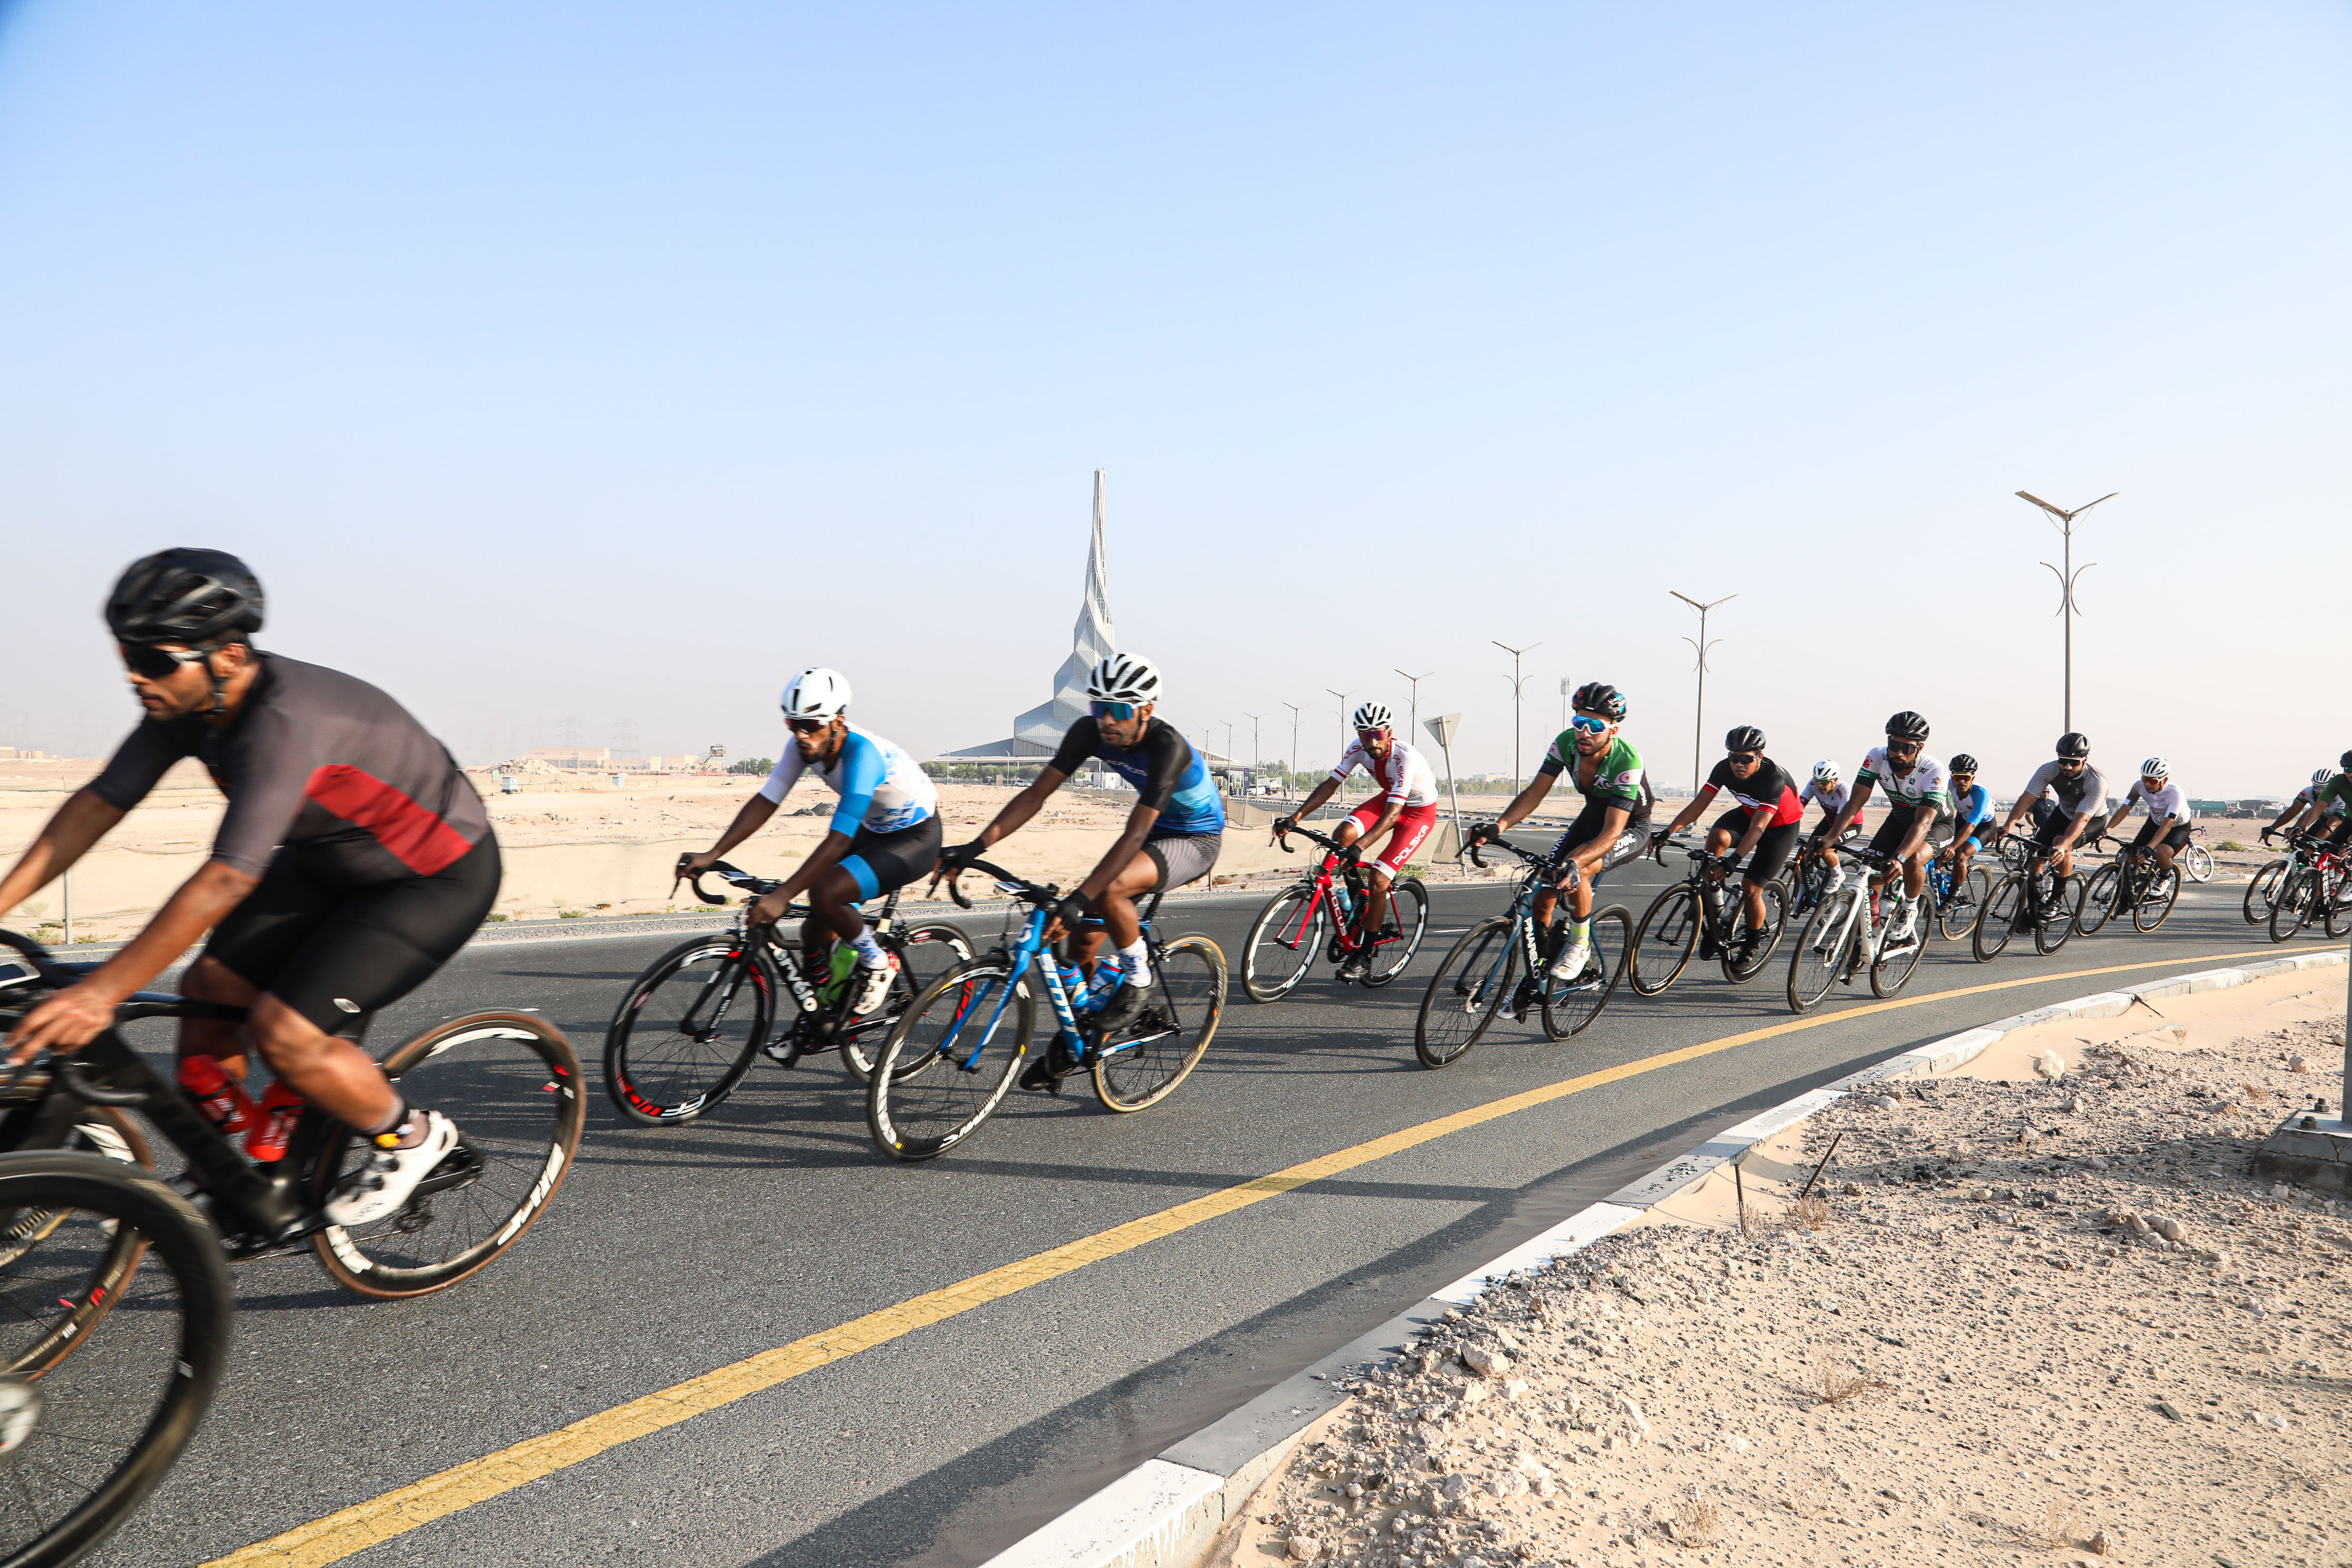 The Mohammed bin Rashid Al Maktoum Solar Park hosts community cycling challenge